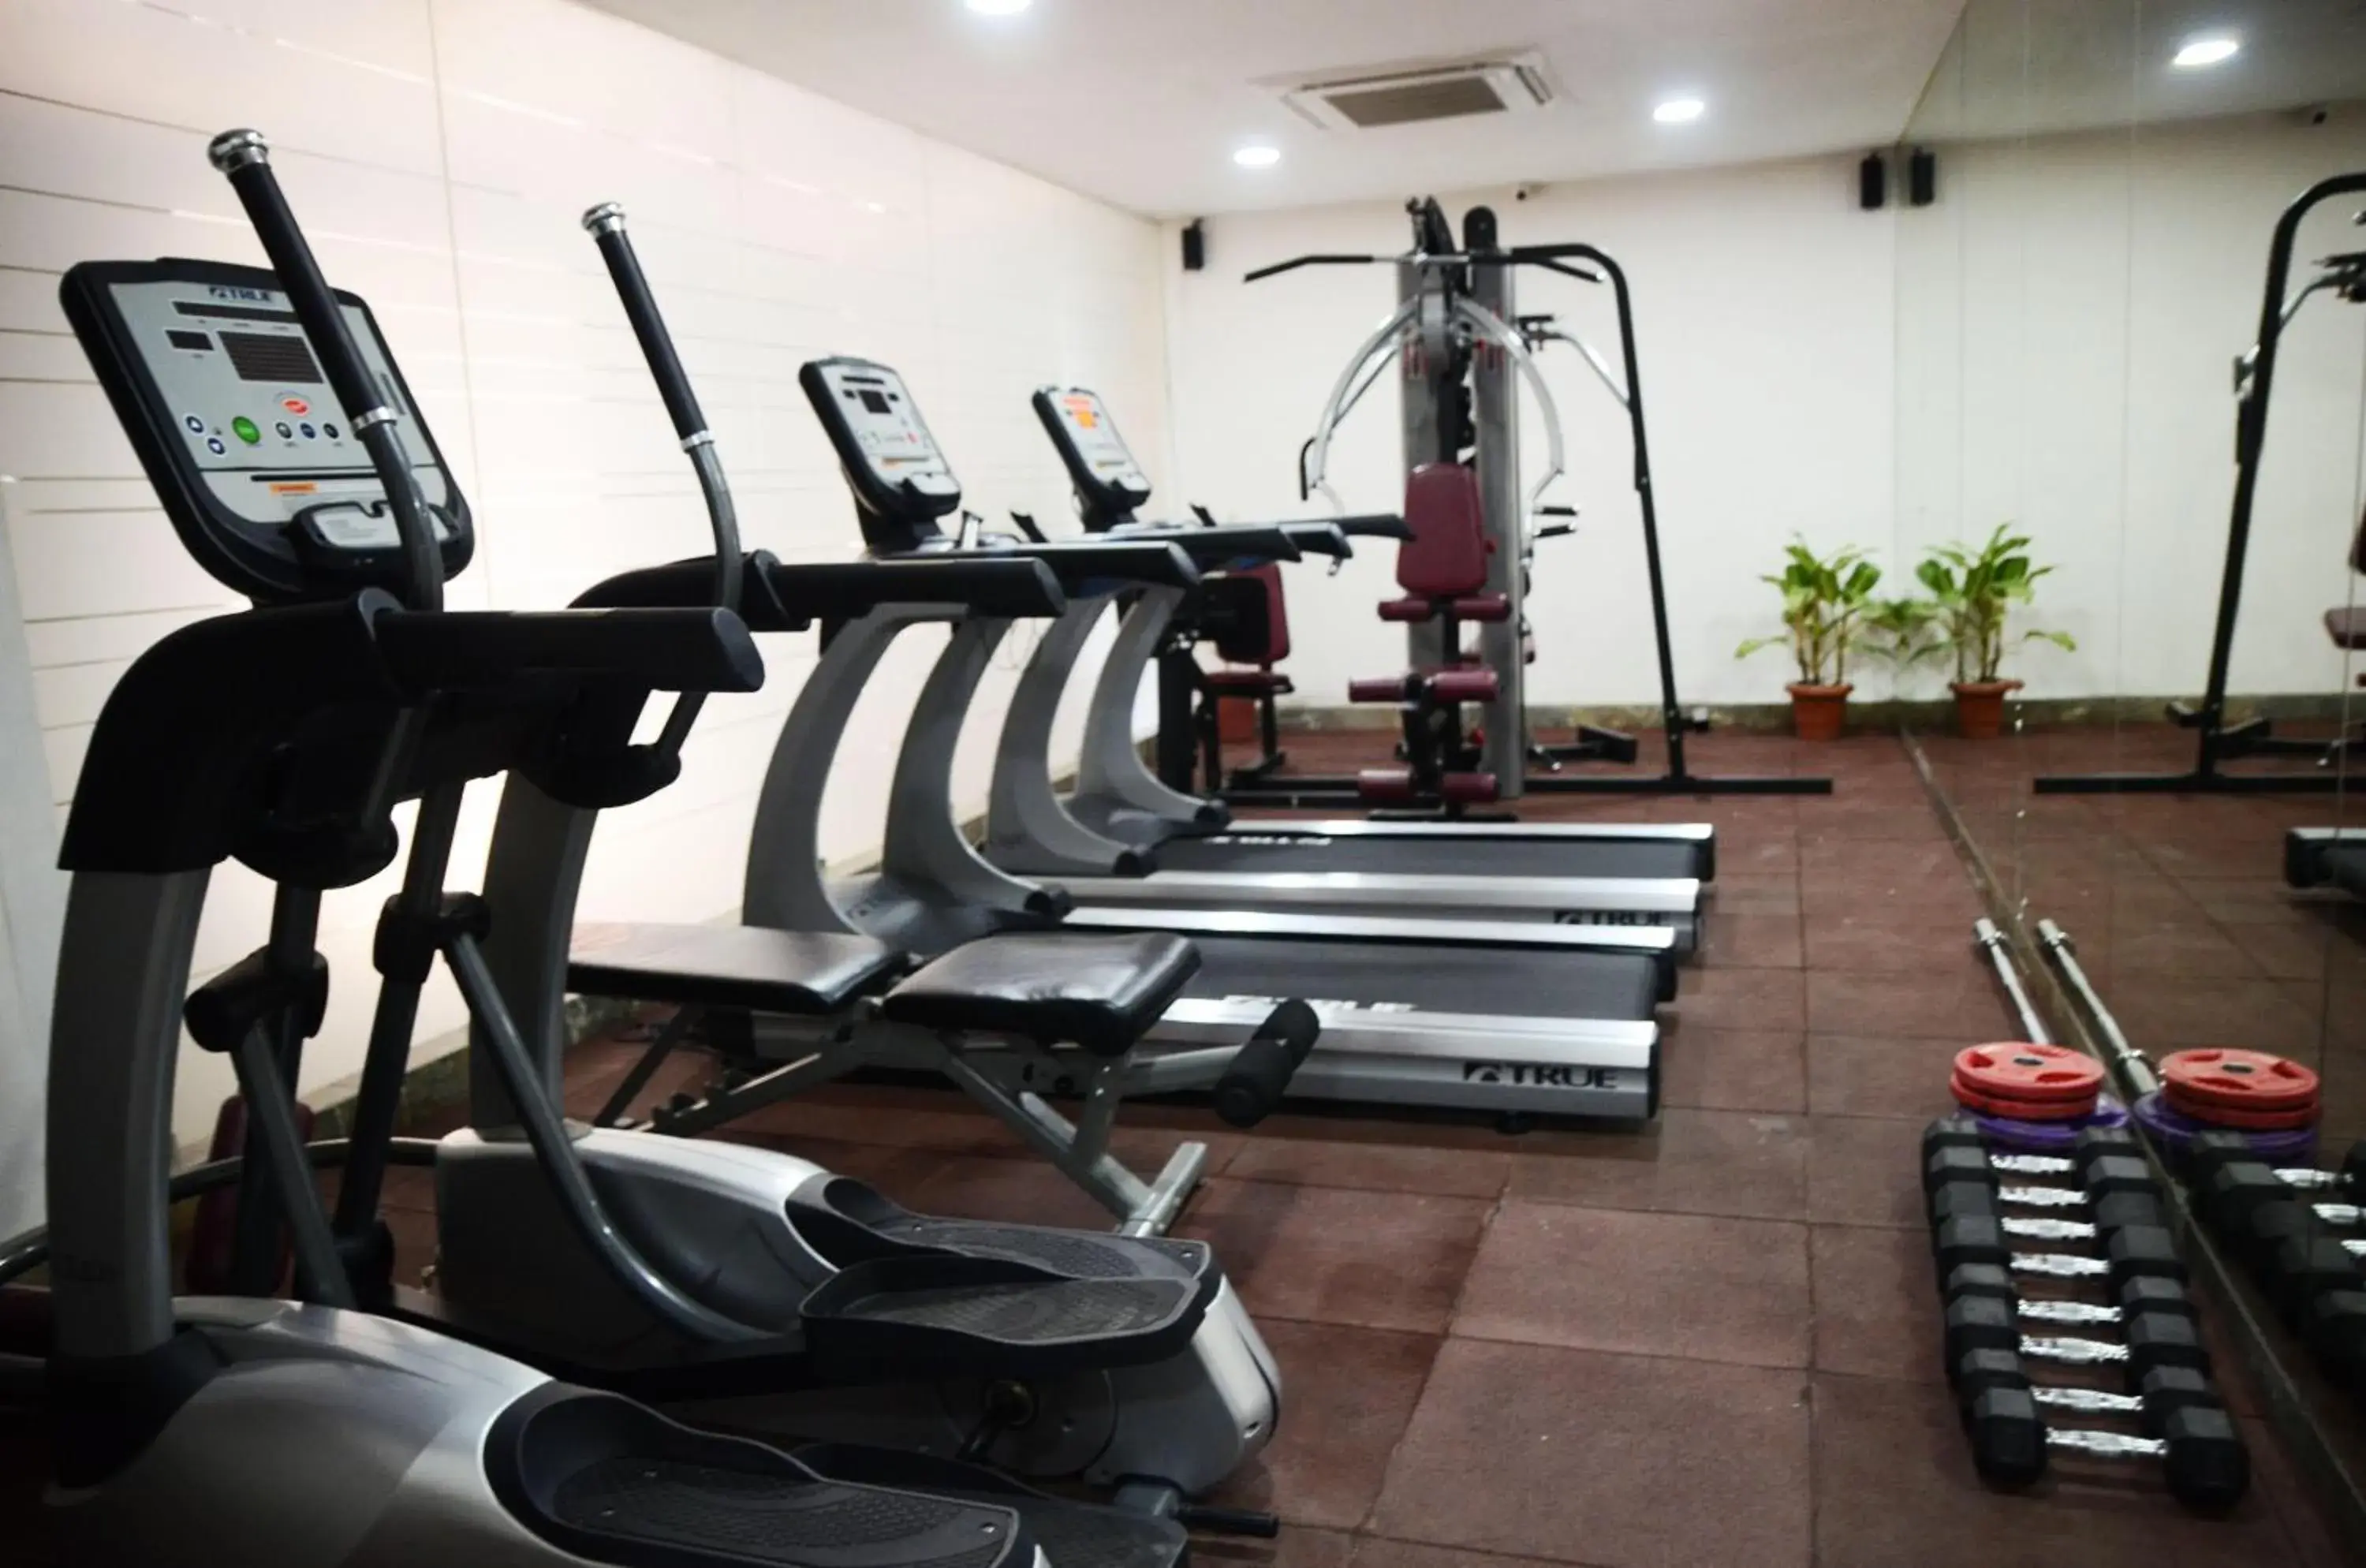 Fitness centre/facilities, Fitness Center/Facilities in Howard Johnson Kolkata